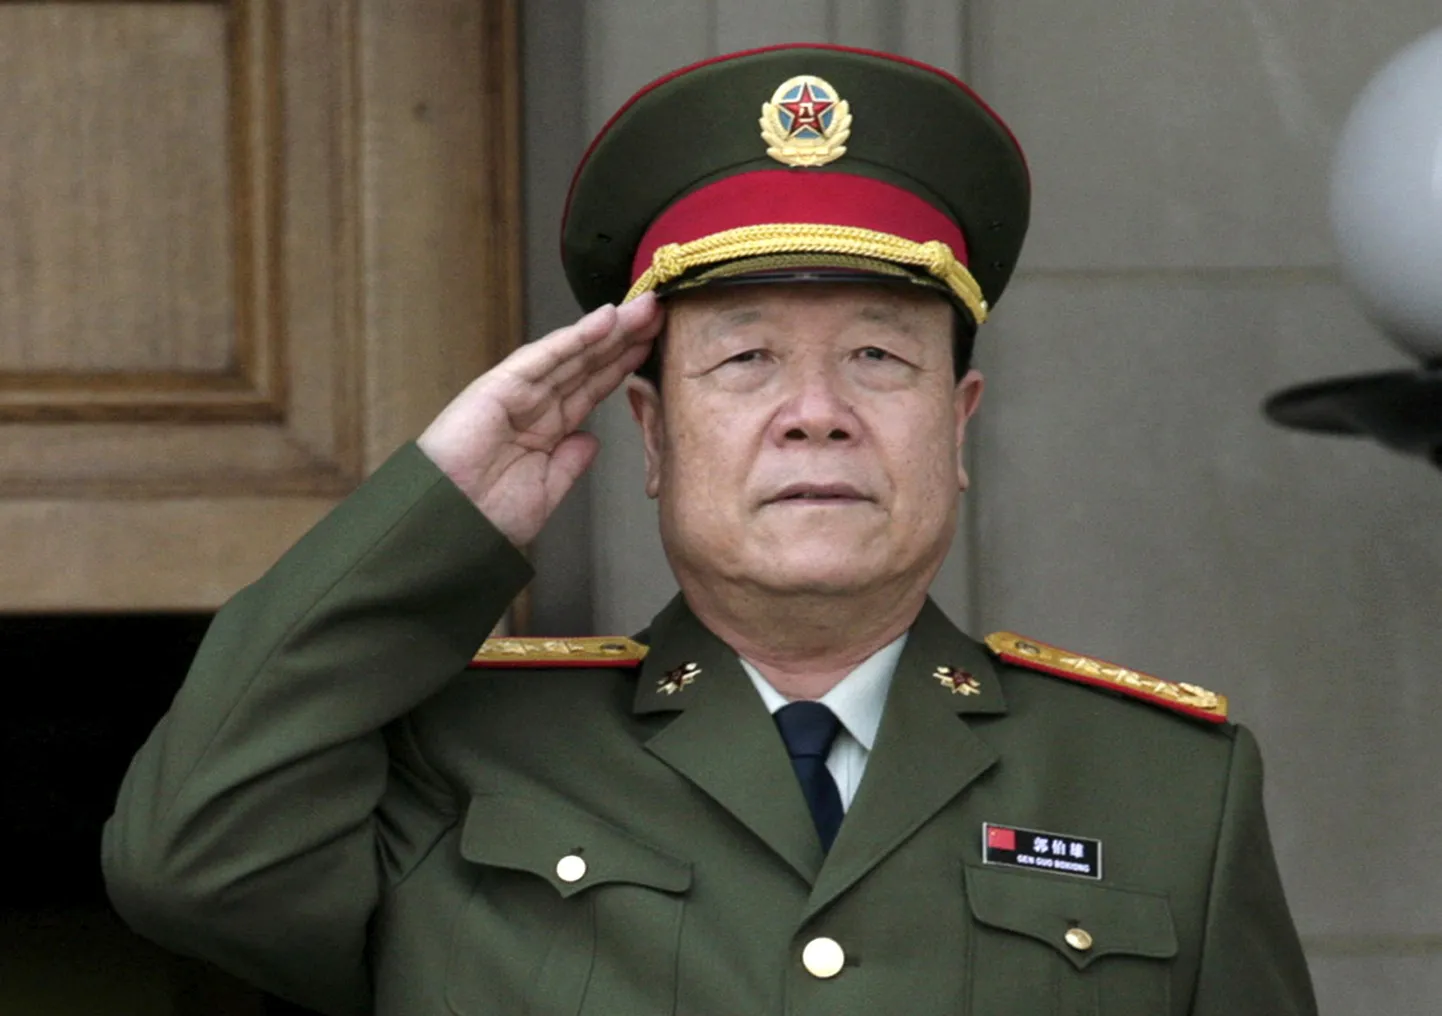 Hiina endine kõrge kindral Guo Boxiong